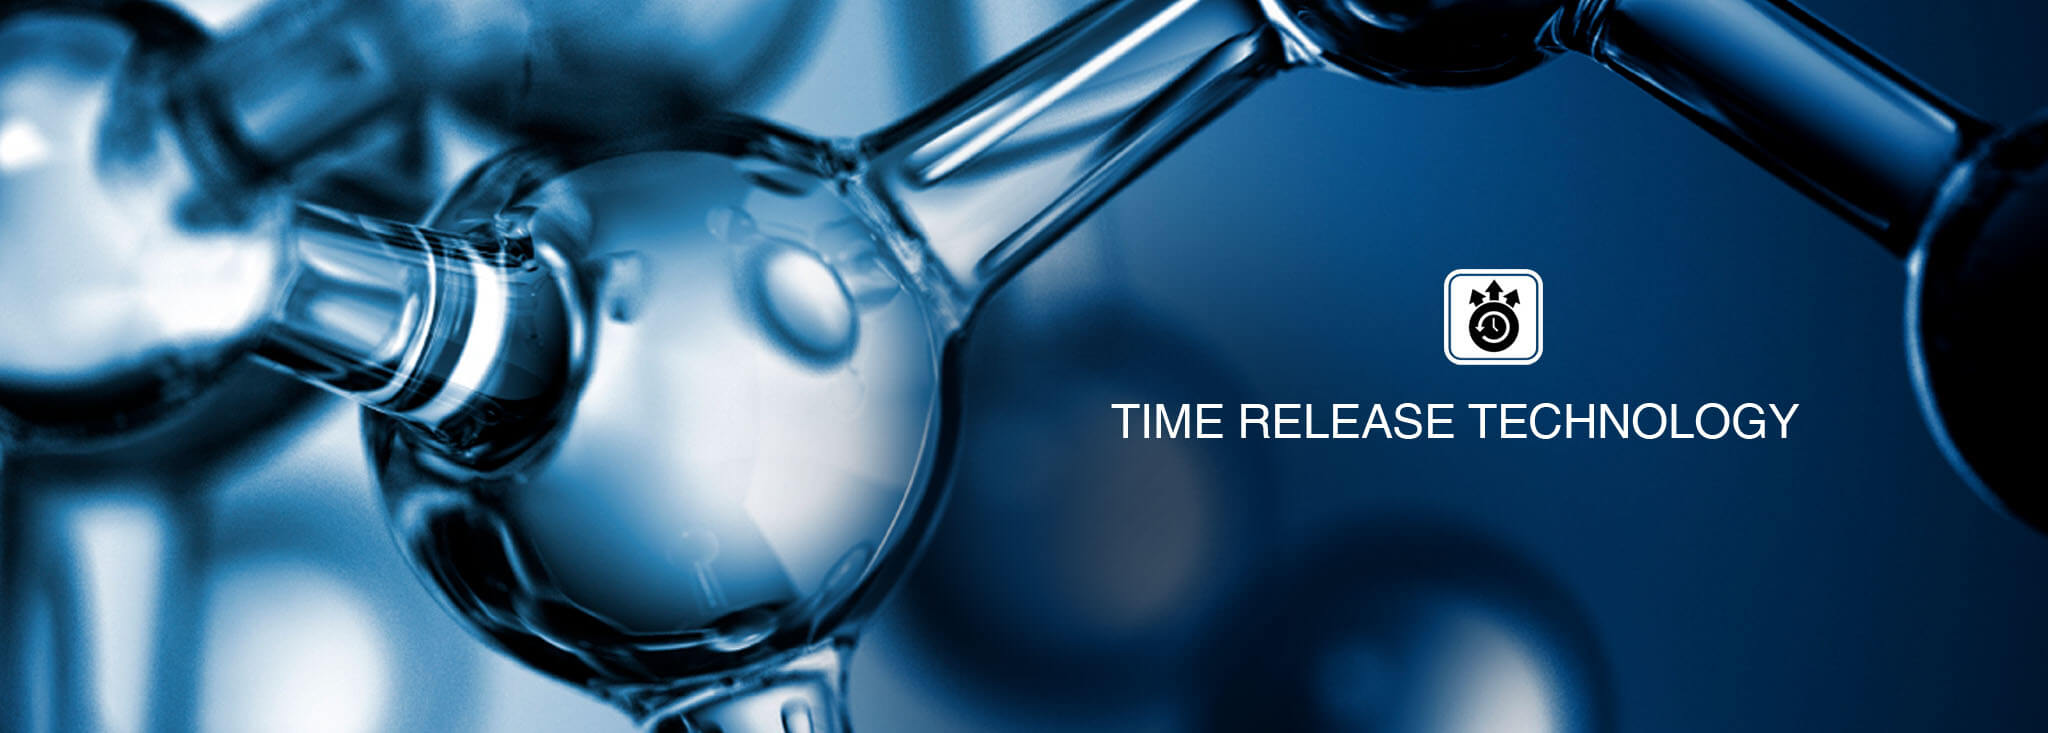 Time release technology slide